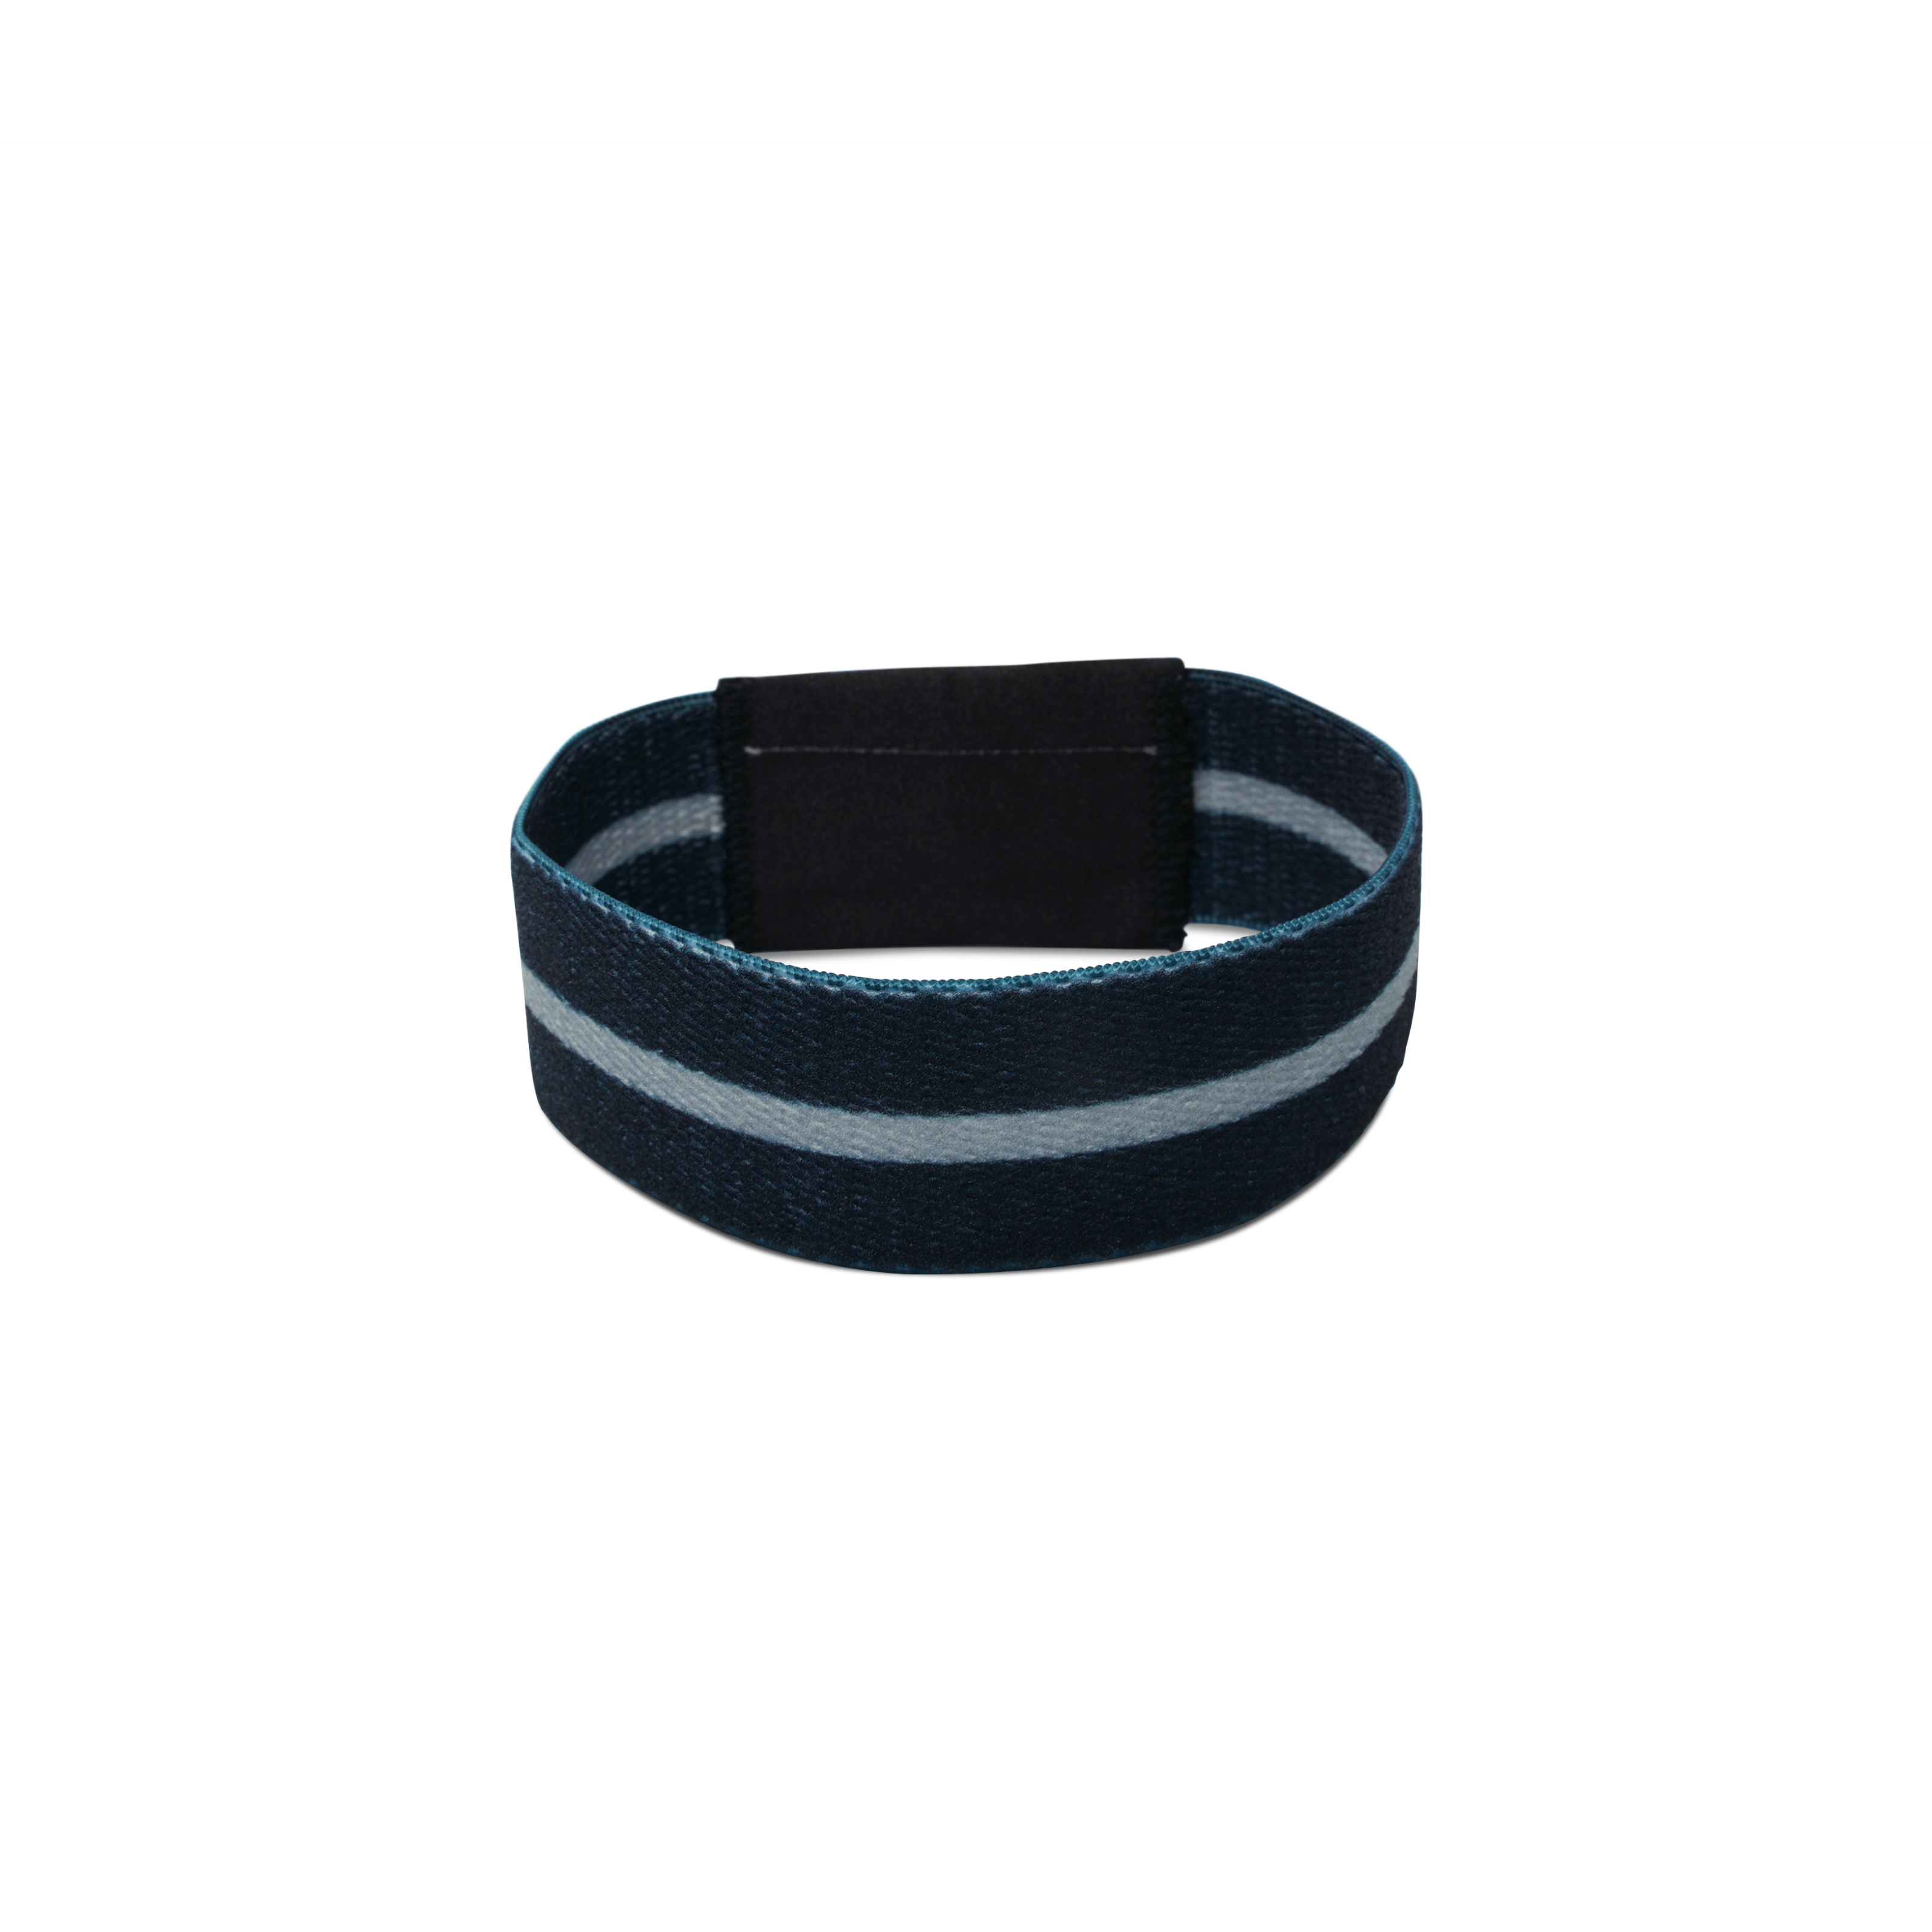  NFC Armband Stoff - 185 x 25 mm - NTAG216 - 924 Byte - grau - Größe M - Durchmesser 59 mm